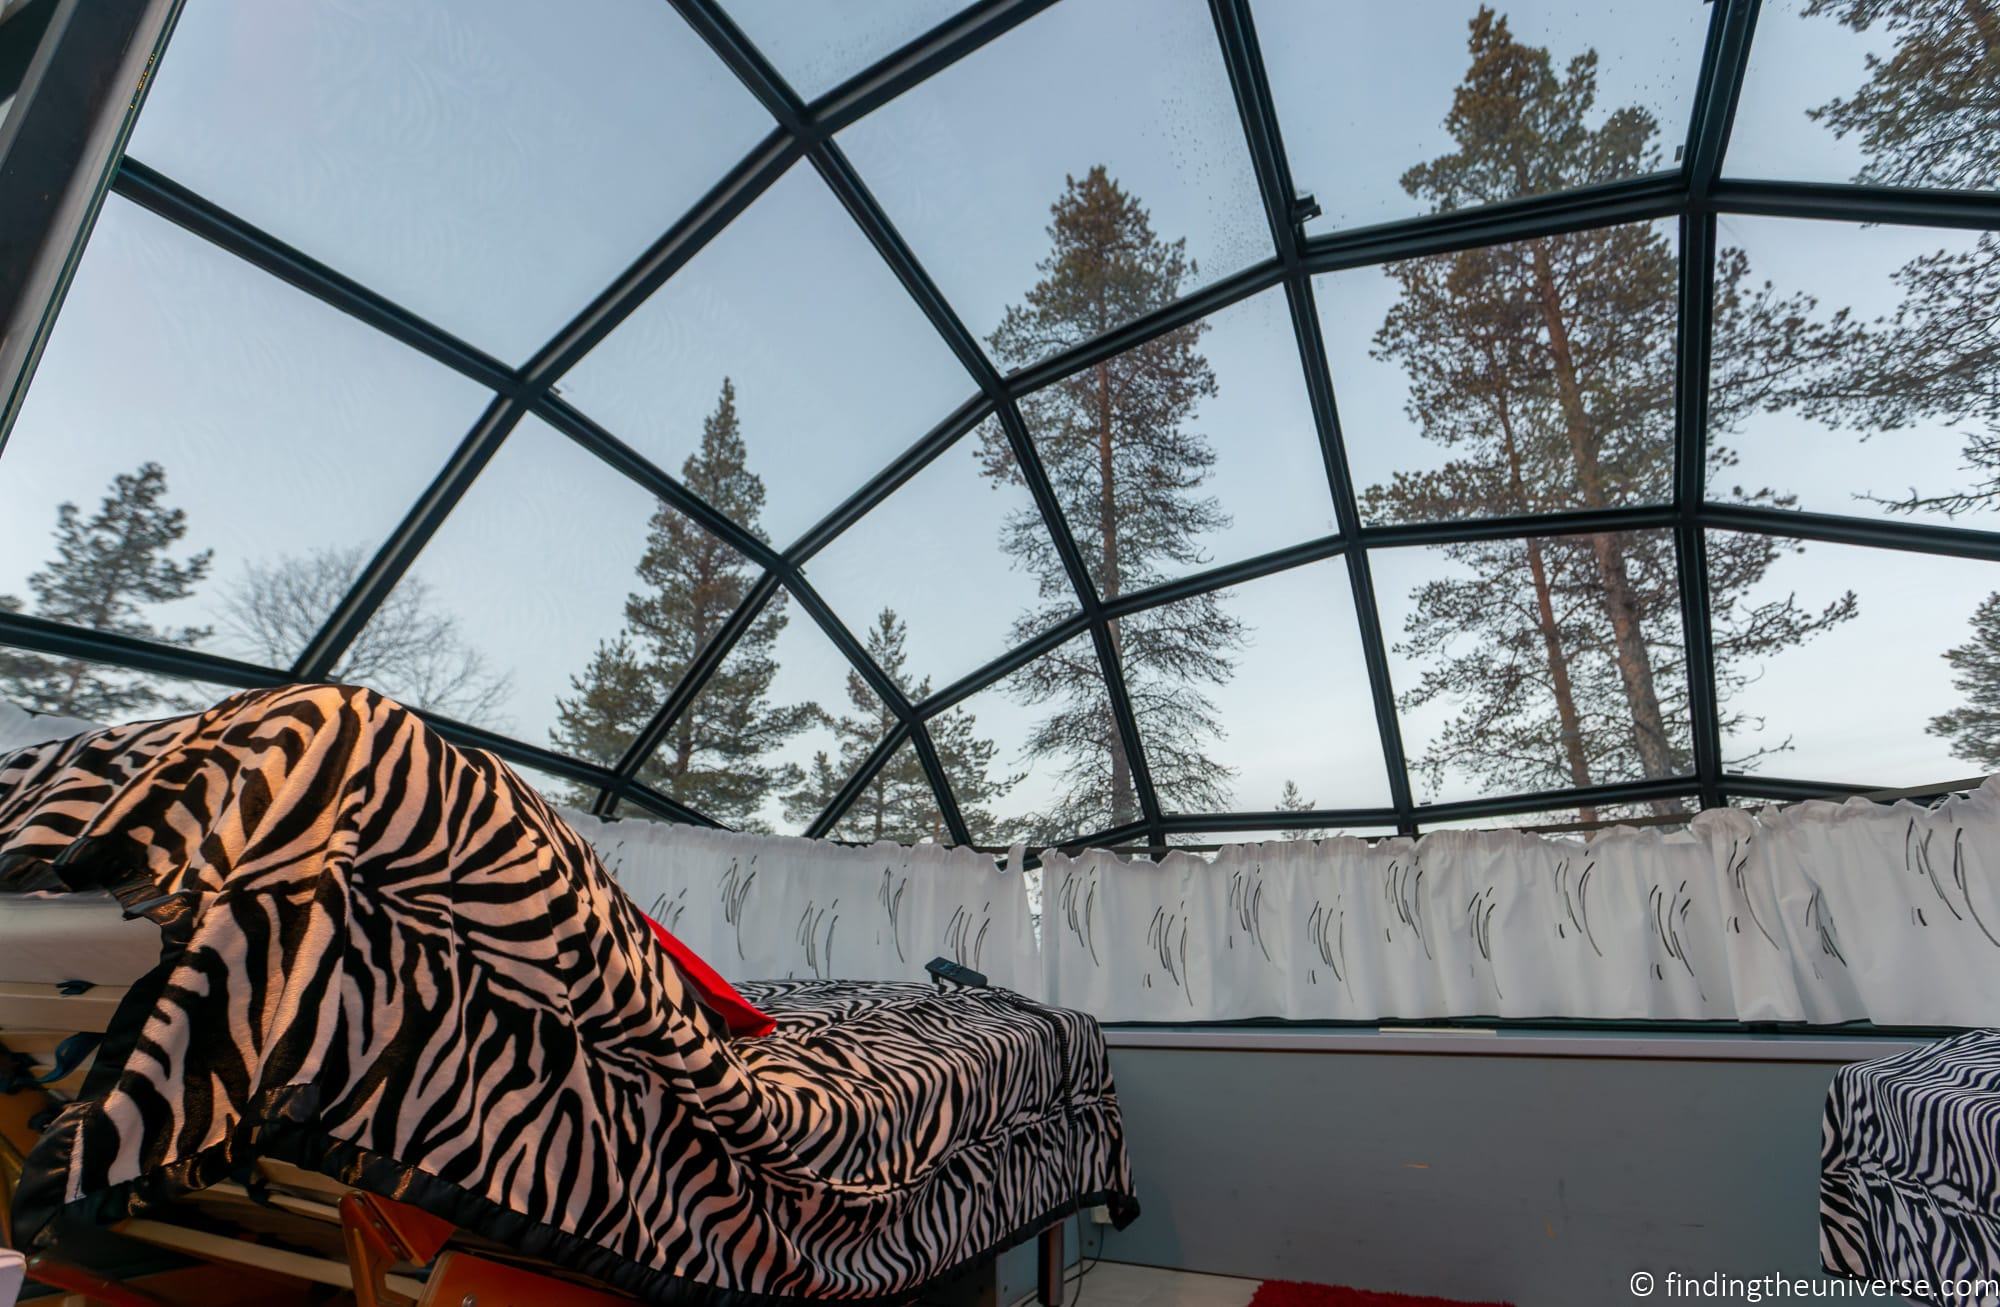 Kakslauttanen Arctic Resort – small glass igloo interior